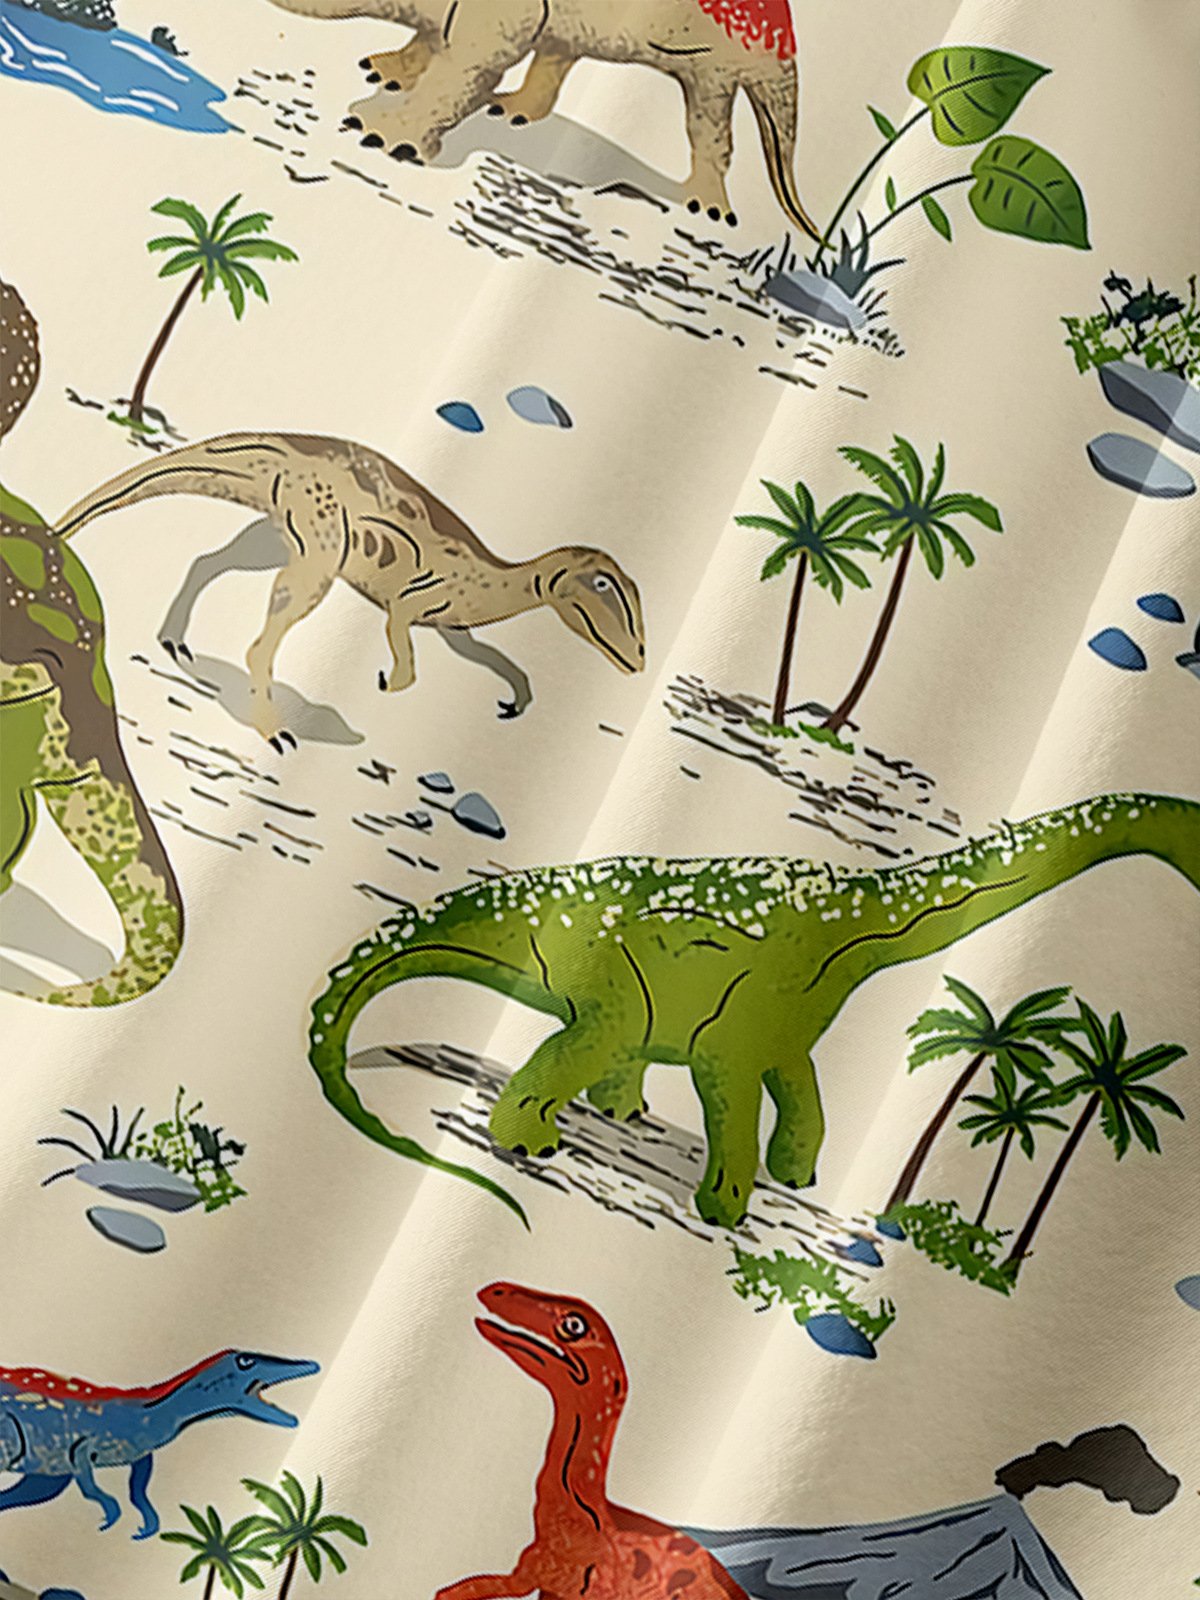 Hardaddy Dinosaur Chest Pocket Short Sleeve Hawaiian Shirt